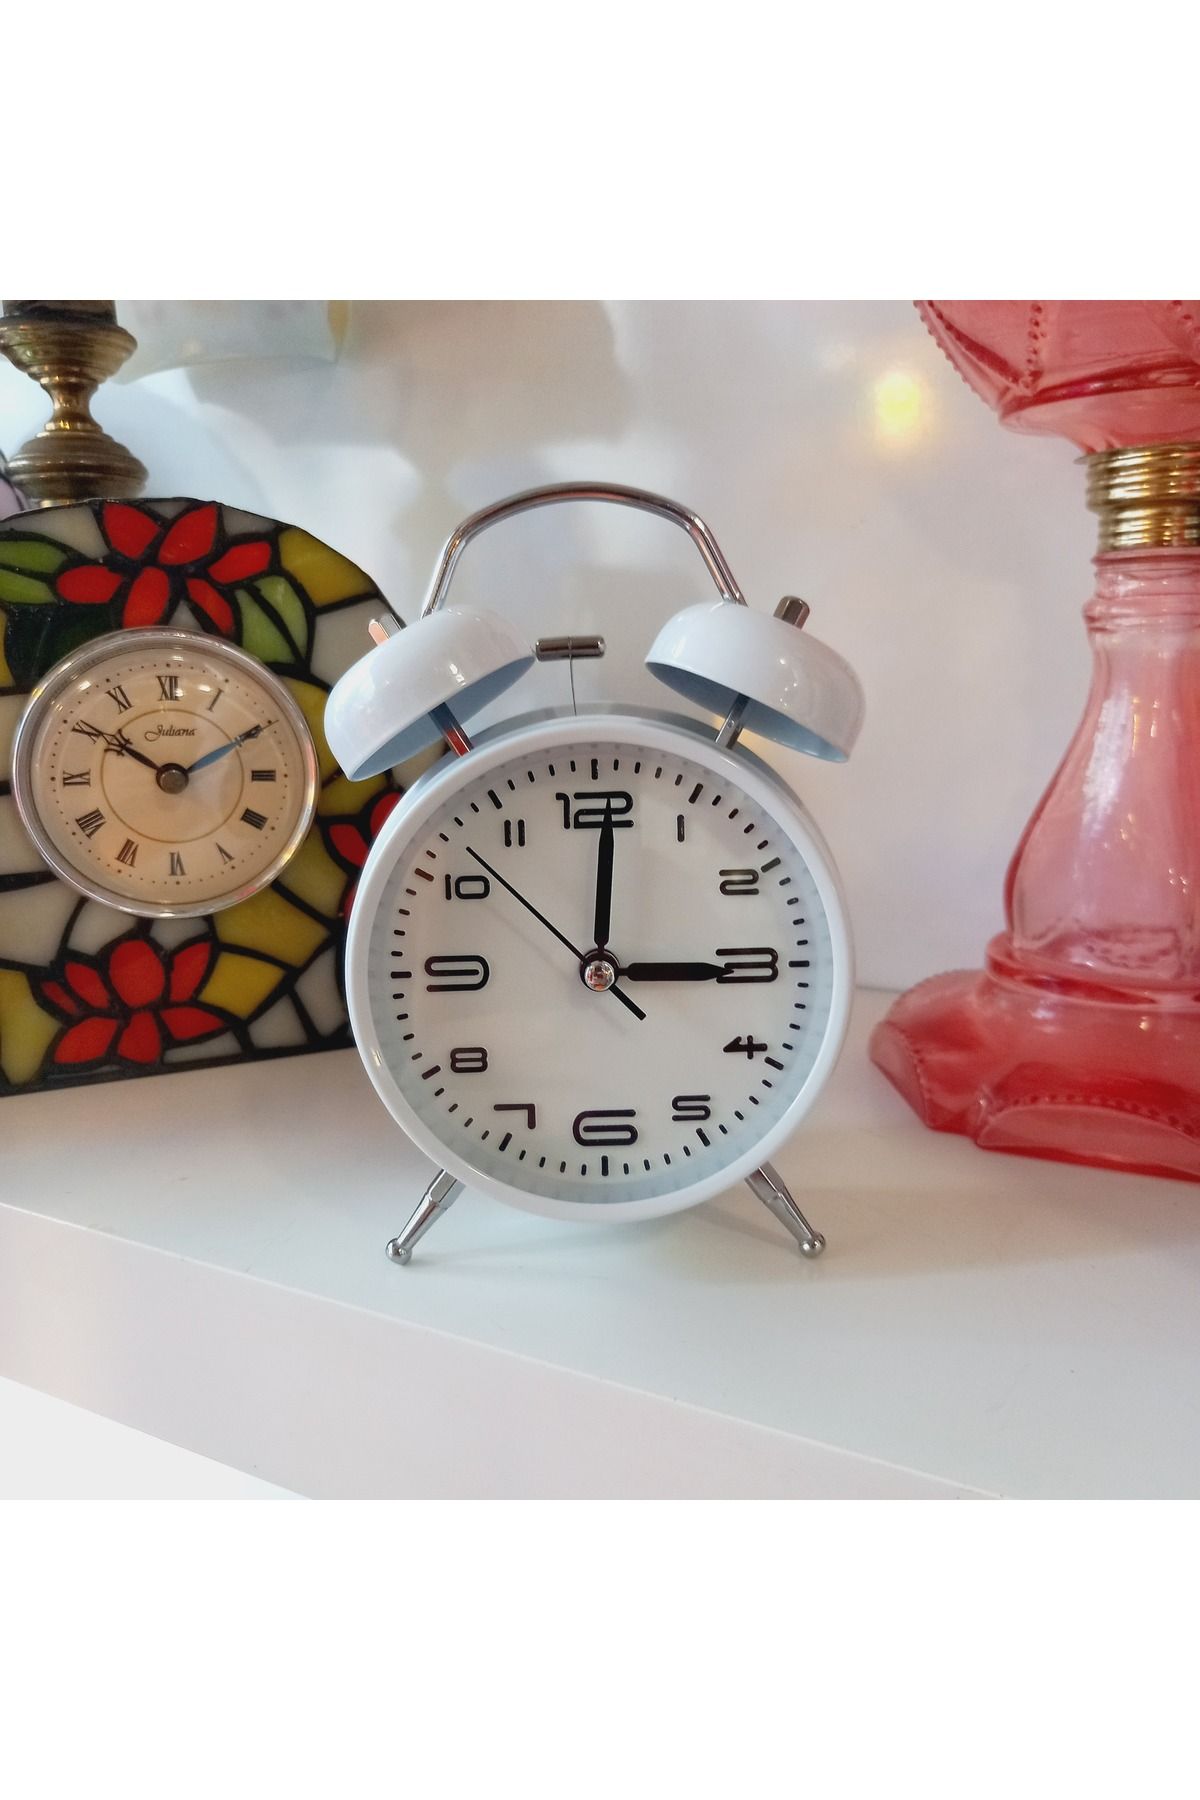 SUPERSTOK Çalar Saat Retro Metal Dekoratif Saat Beyaz Renk Masa Saati